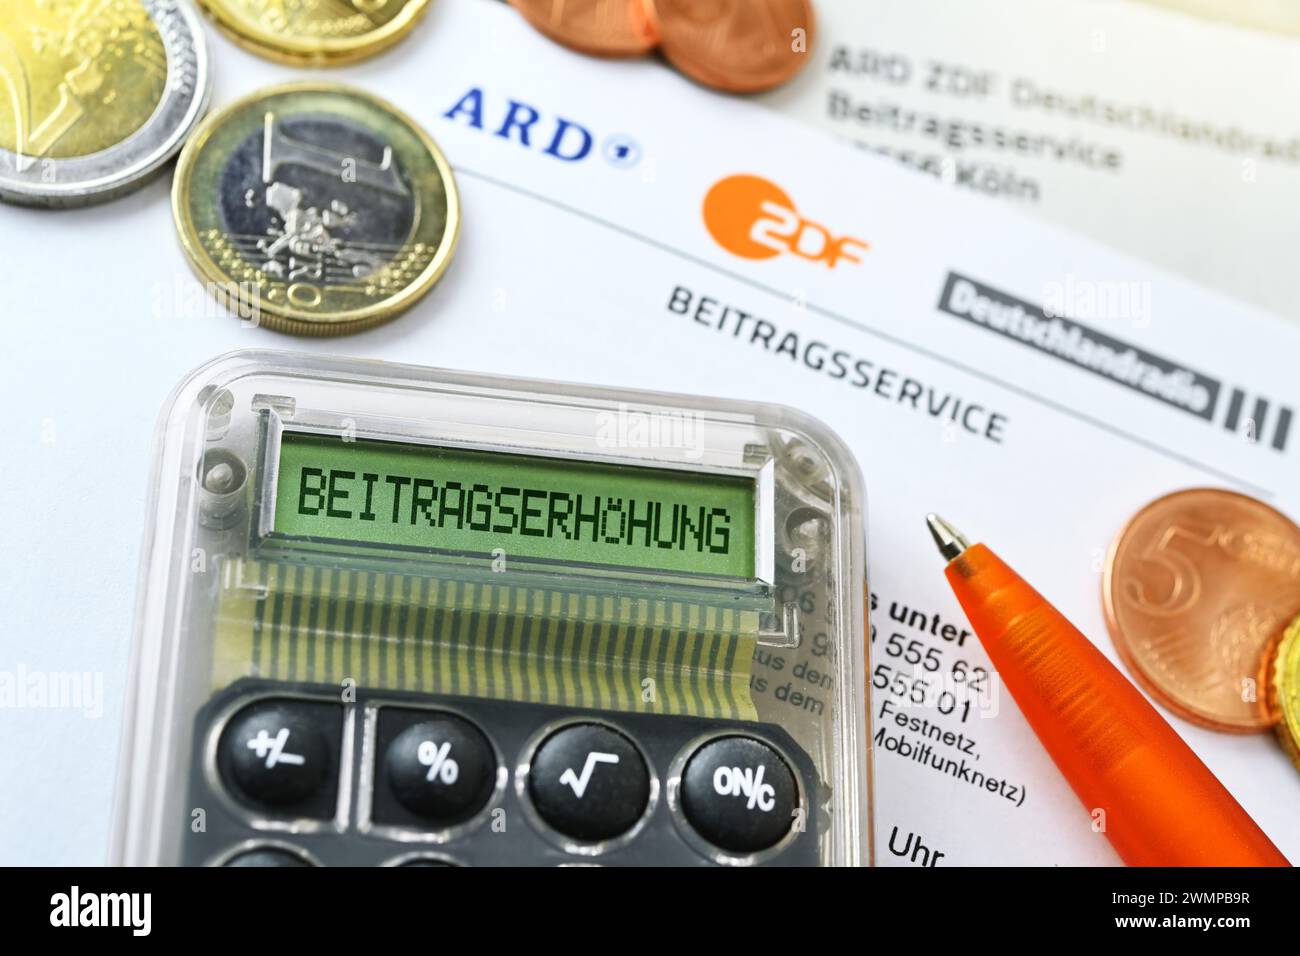 Lettera di ARD ZDF Deutschlandradio Beitragsservice con Calcolatrice e iscrizione "Beitragerhöhung", foto simbolica "Erhöhung Des Rundfunkbeitrags" Foto Stock